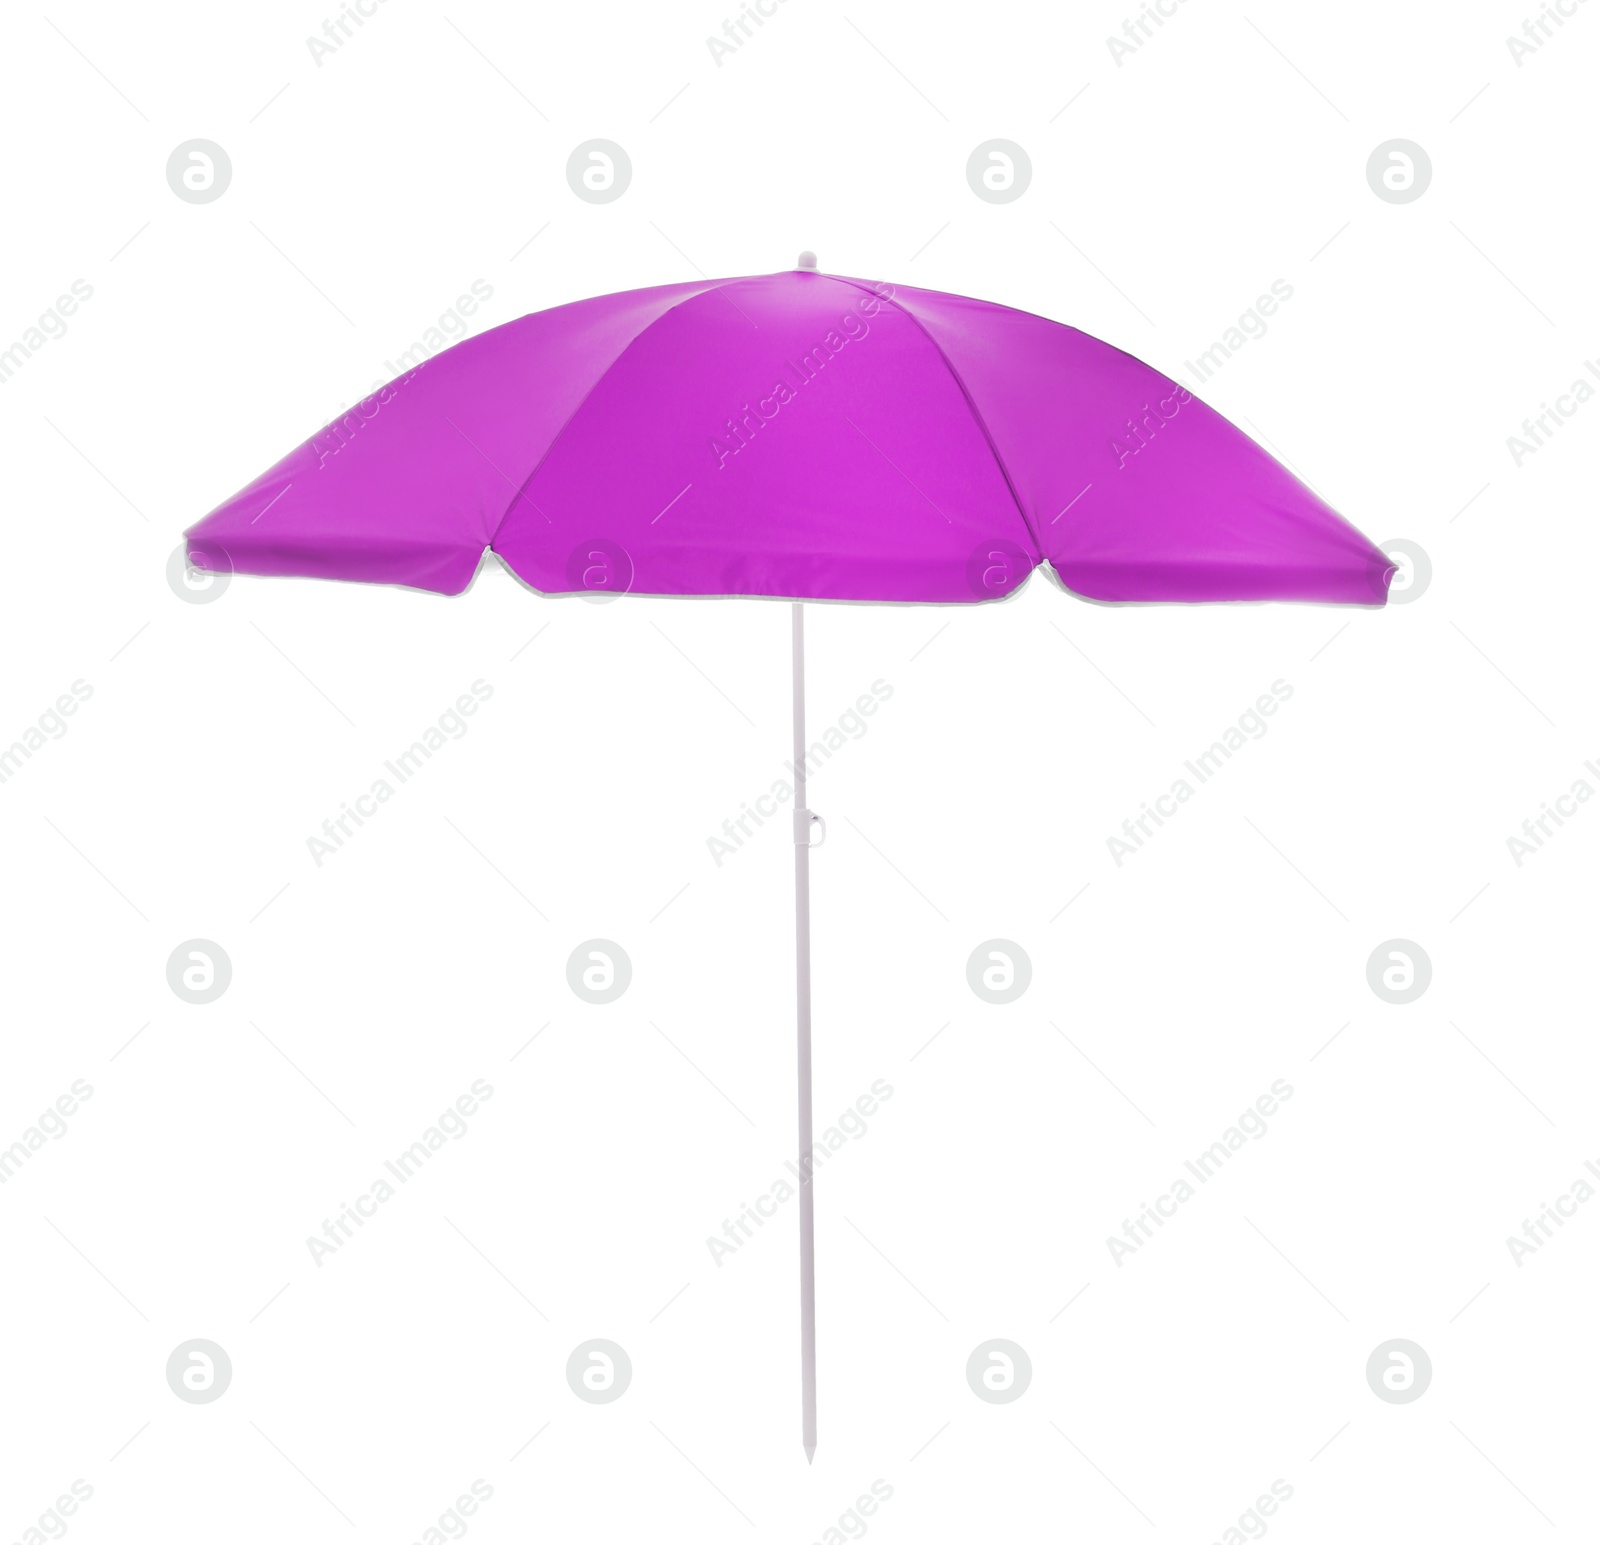 Image of Open purple beach umbrella isolated on white